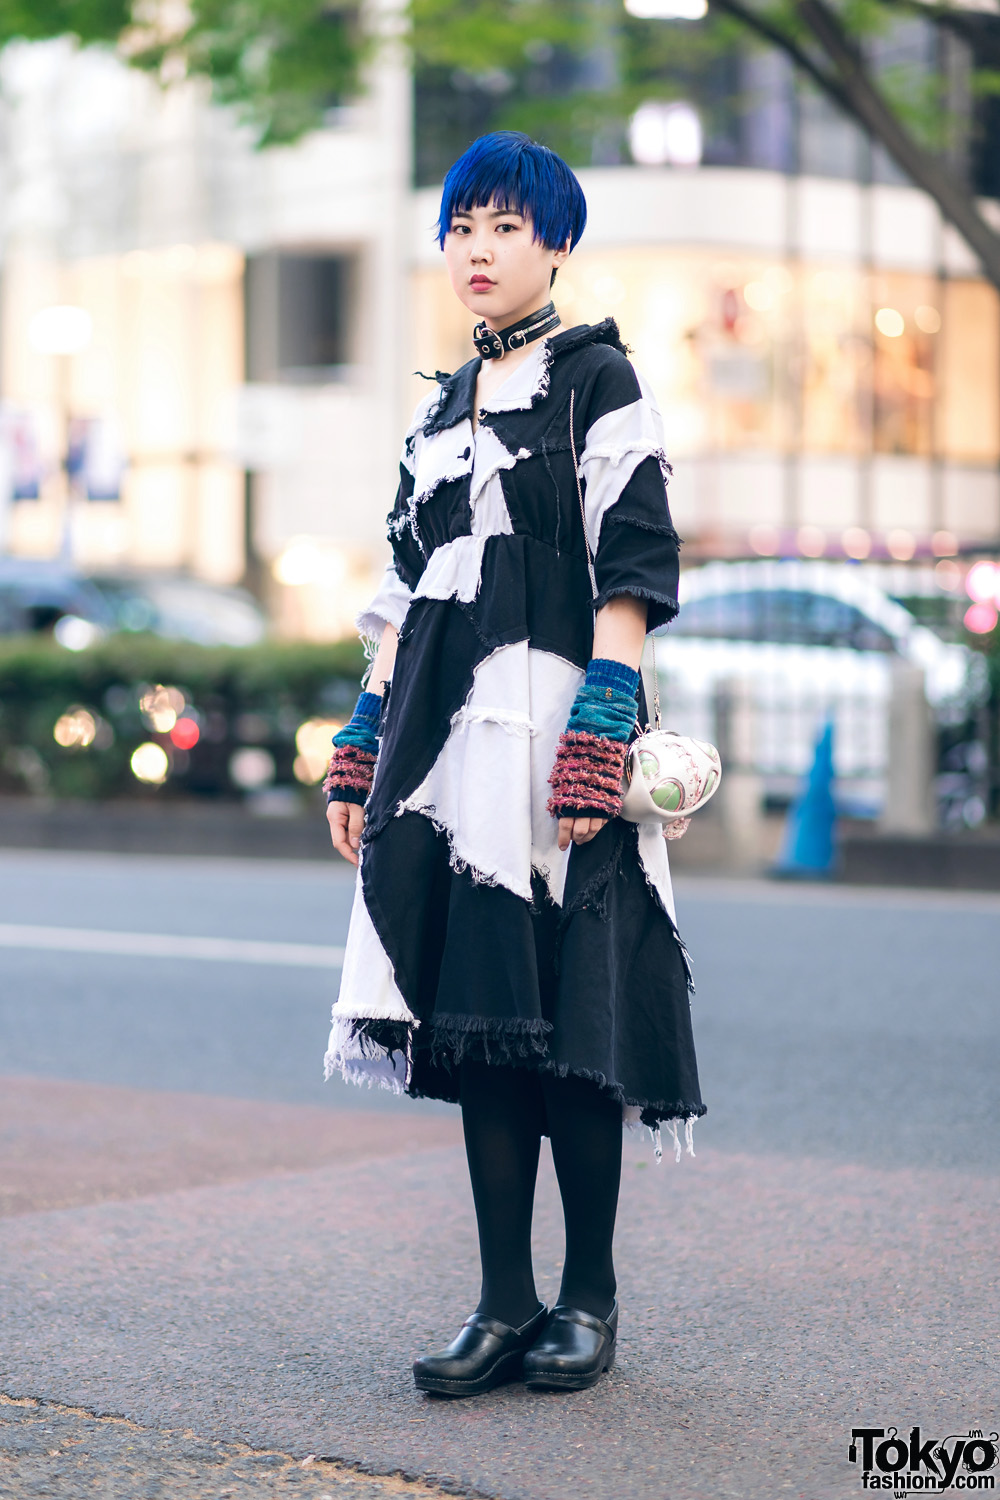 Harajuku Street Style w/ Blue Hair, Ikumi Patchwork Denim Dress, Vivienne Westwood Arm Warmers, Handmade Bag & Dansko Clogs